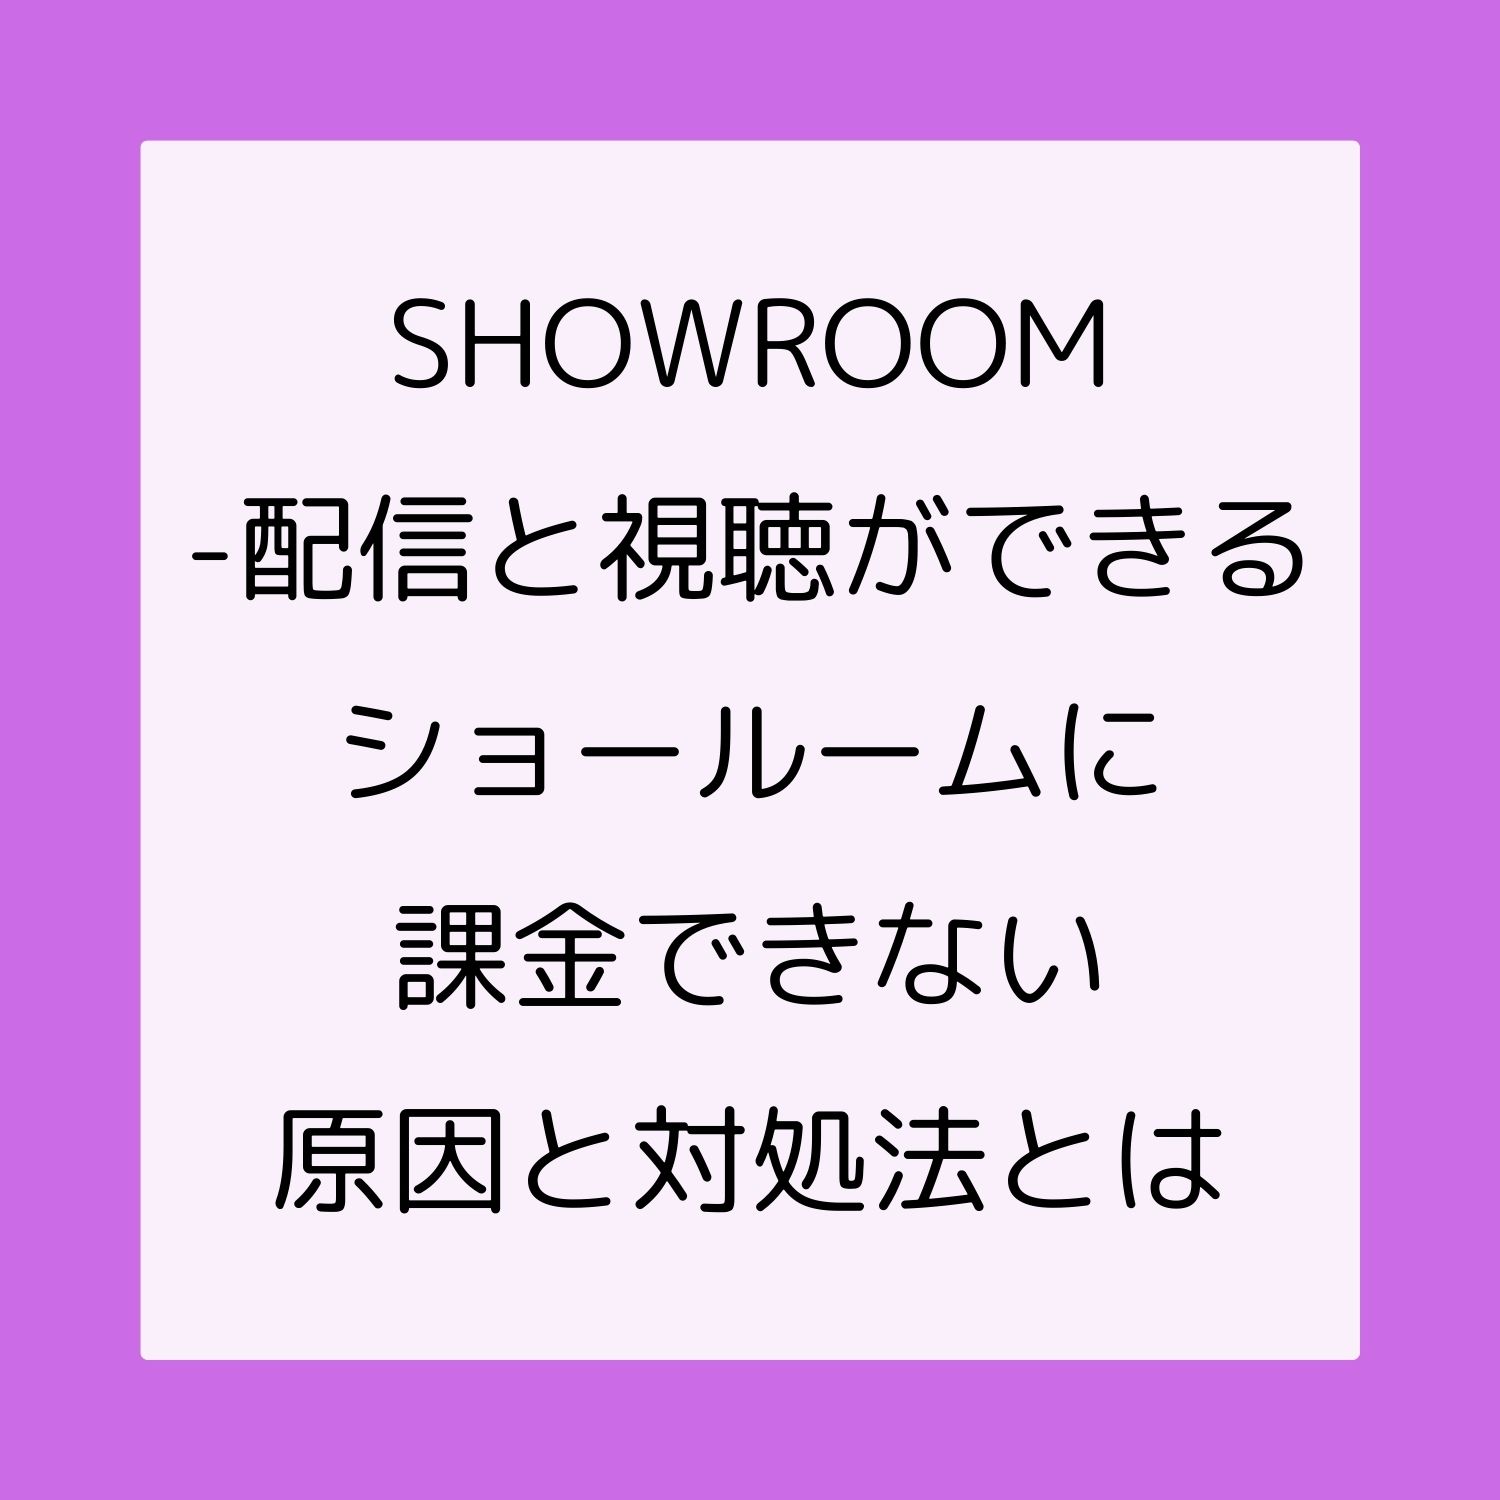 SHOWROOM - 配信と視聴ができるショールームに課金できない原因と対処法とは #SHOWROOM - 配信と視聴ができるショールーム